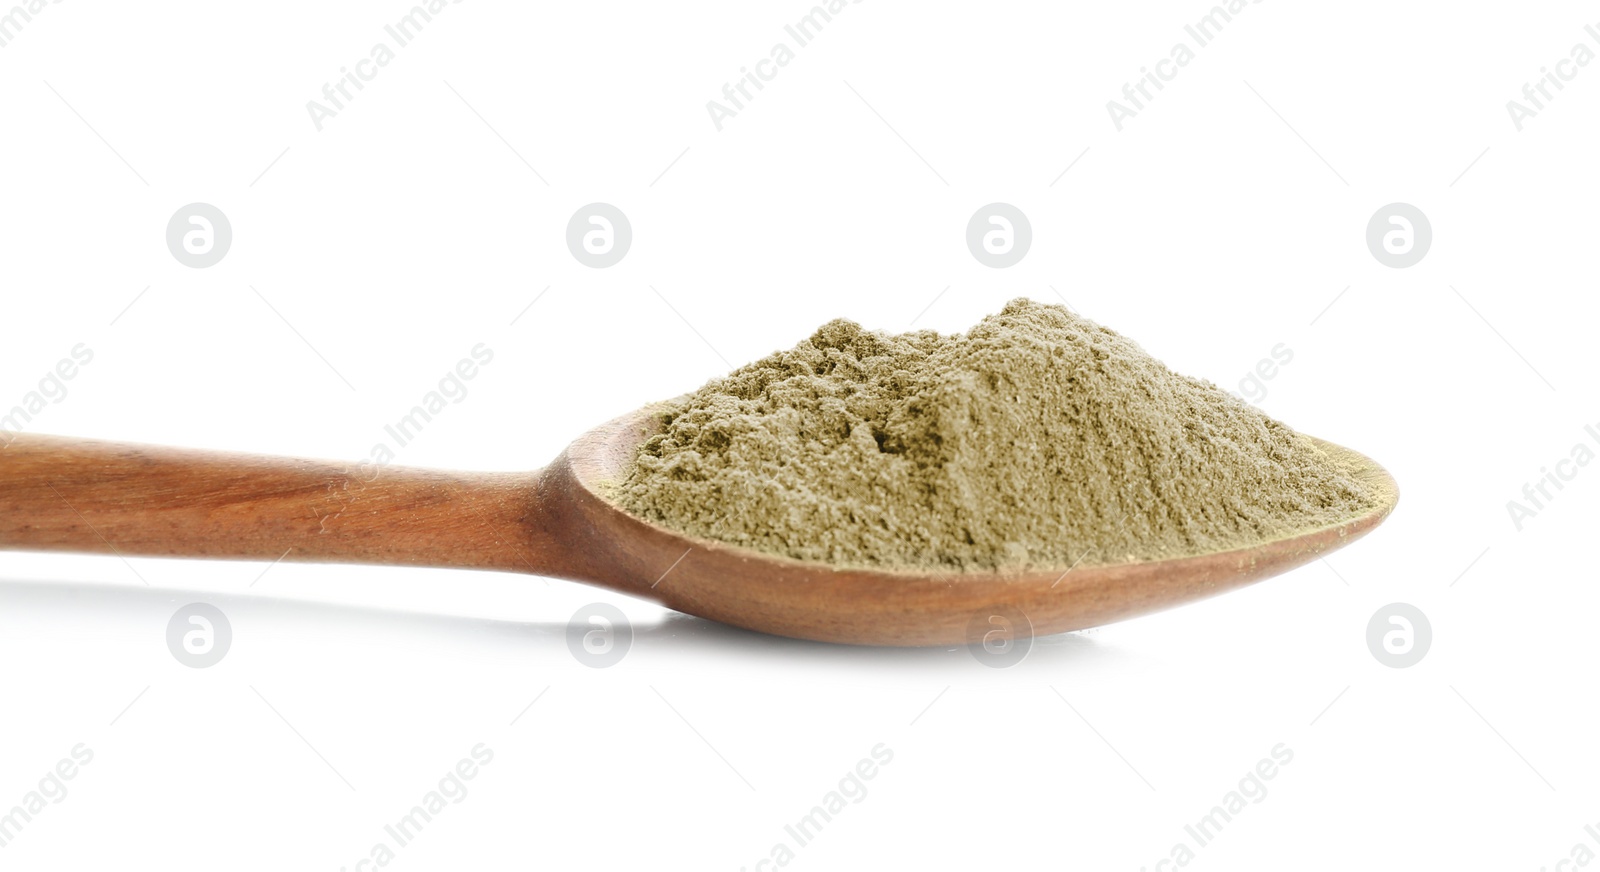 Photo of Spoon with hemp protein powder on white background